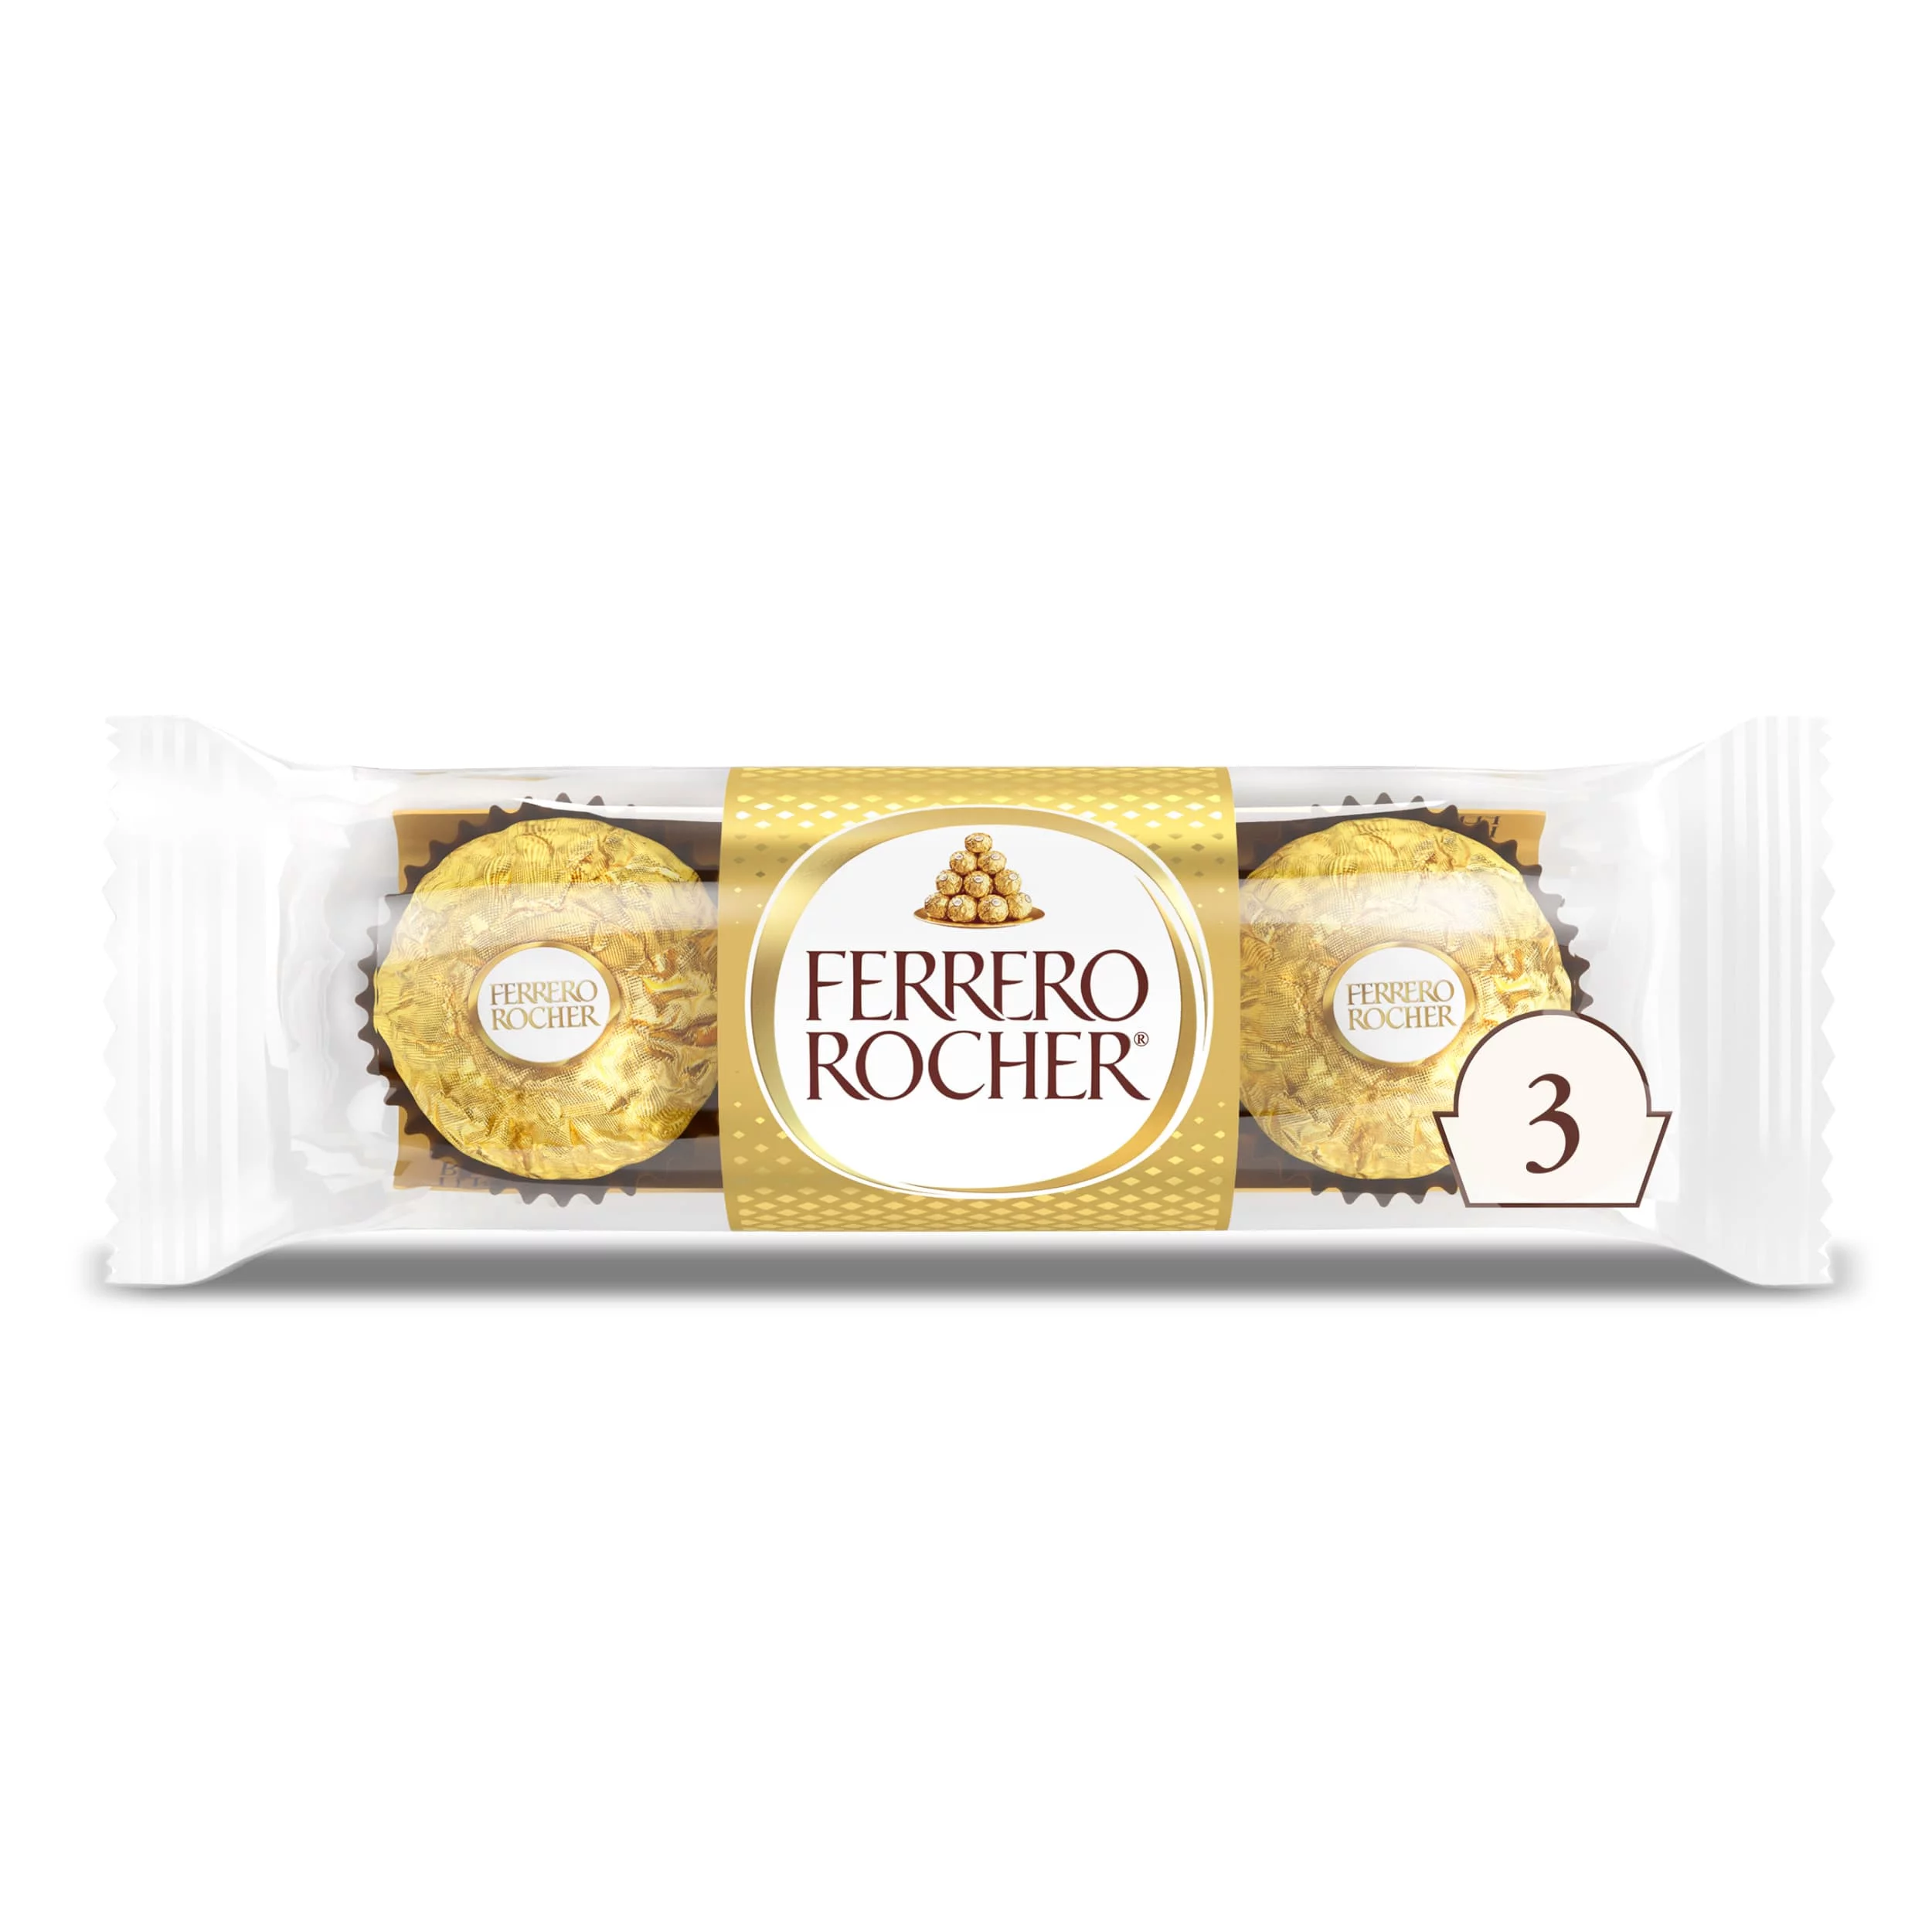 Ferrero Rocher Fine Hazelnut Milk Chocolate, 3 Count, Individually Wrapped Chocolate Candy, 1.3 oz